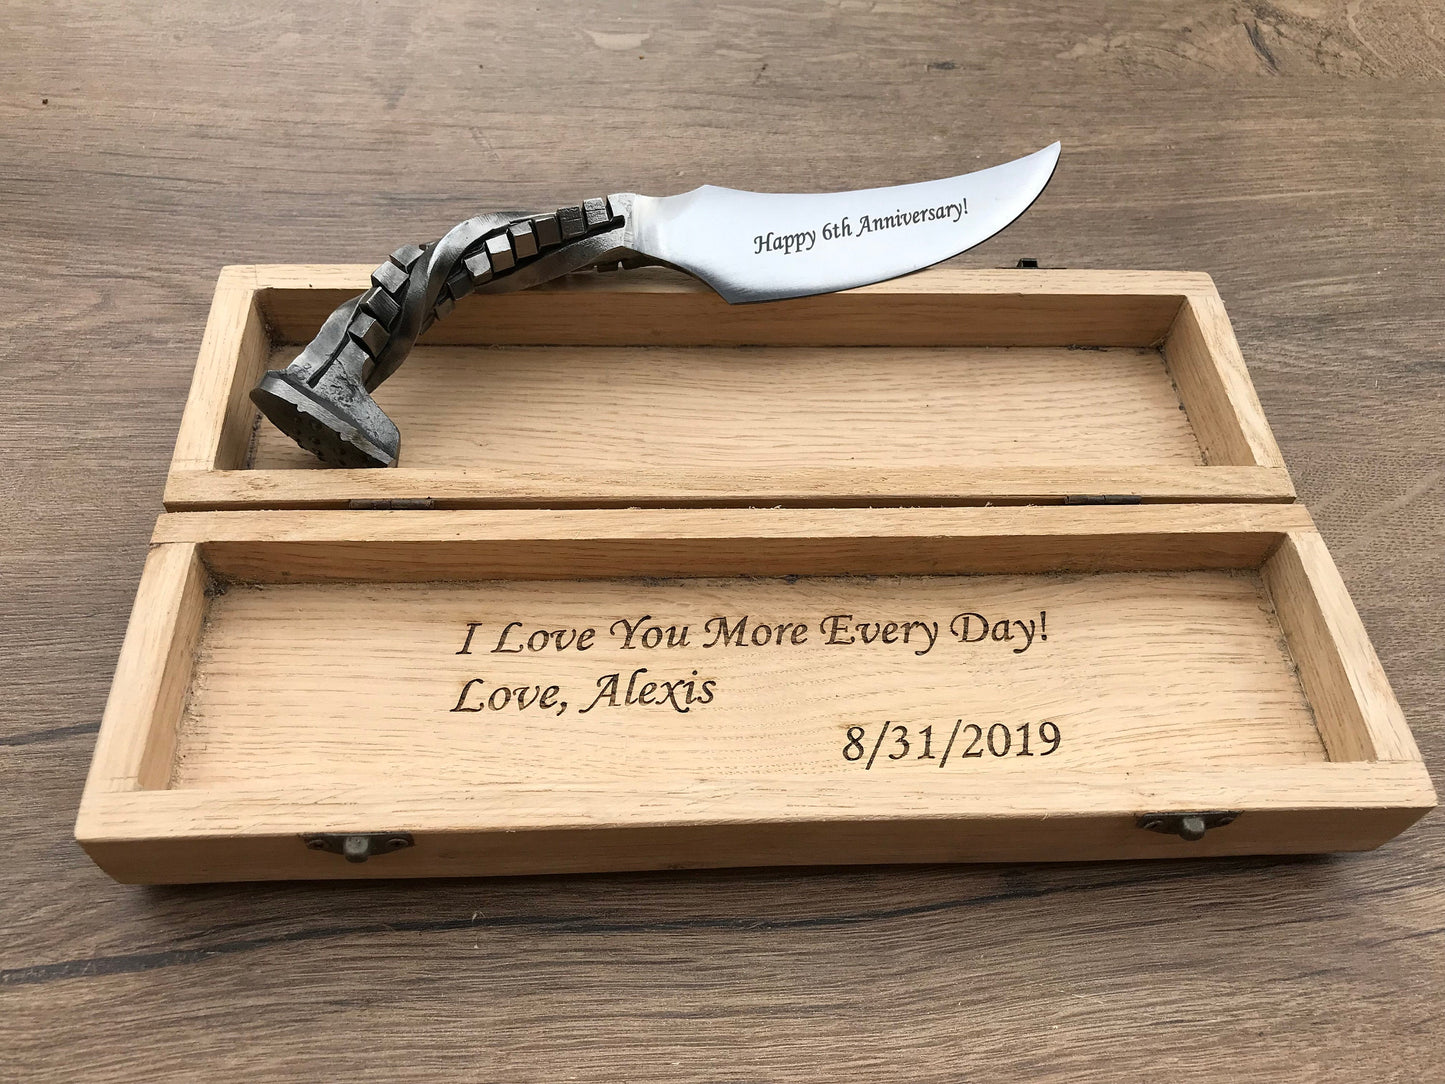 6th anniversary, 6 year anniversary, railroad spike knife, 6th anniversary gift for him, iron gift for him, iron anniversary gift for him